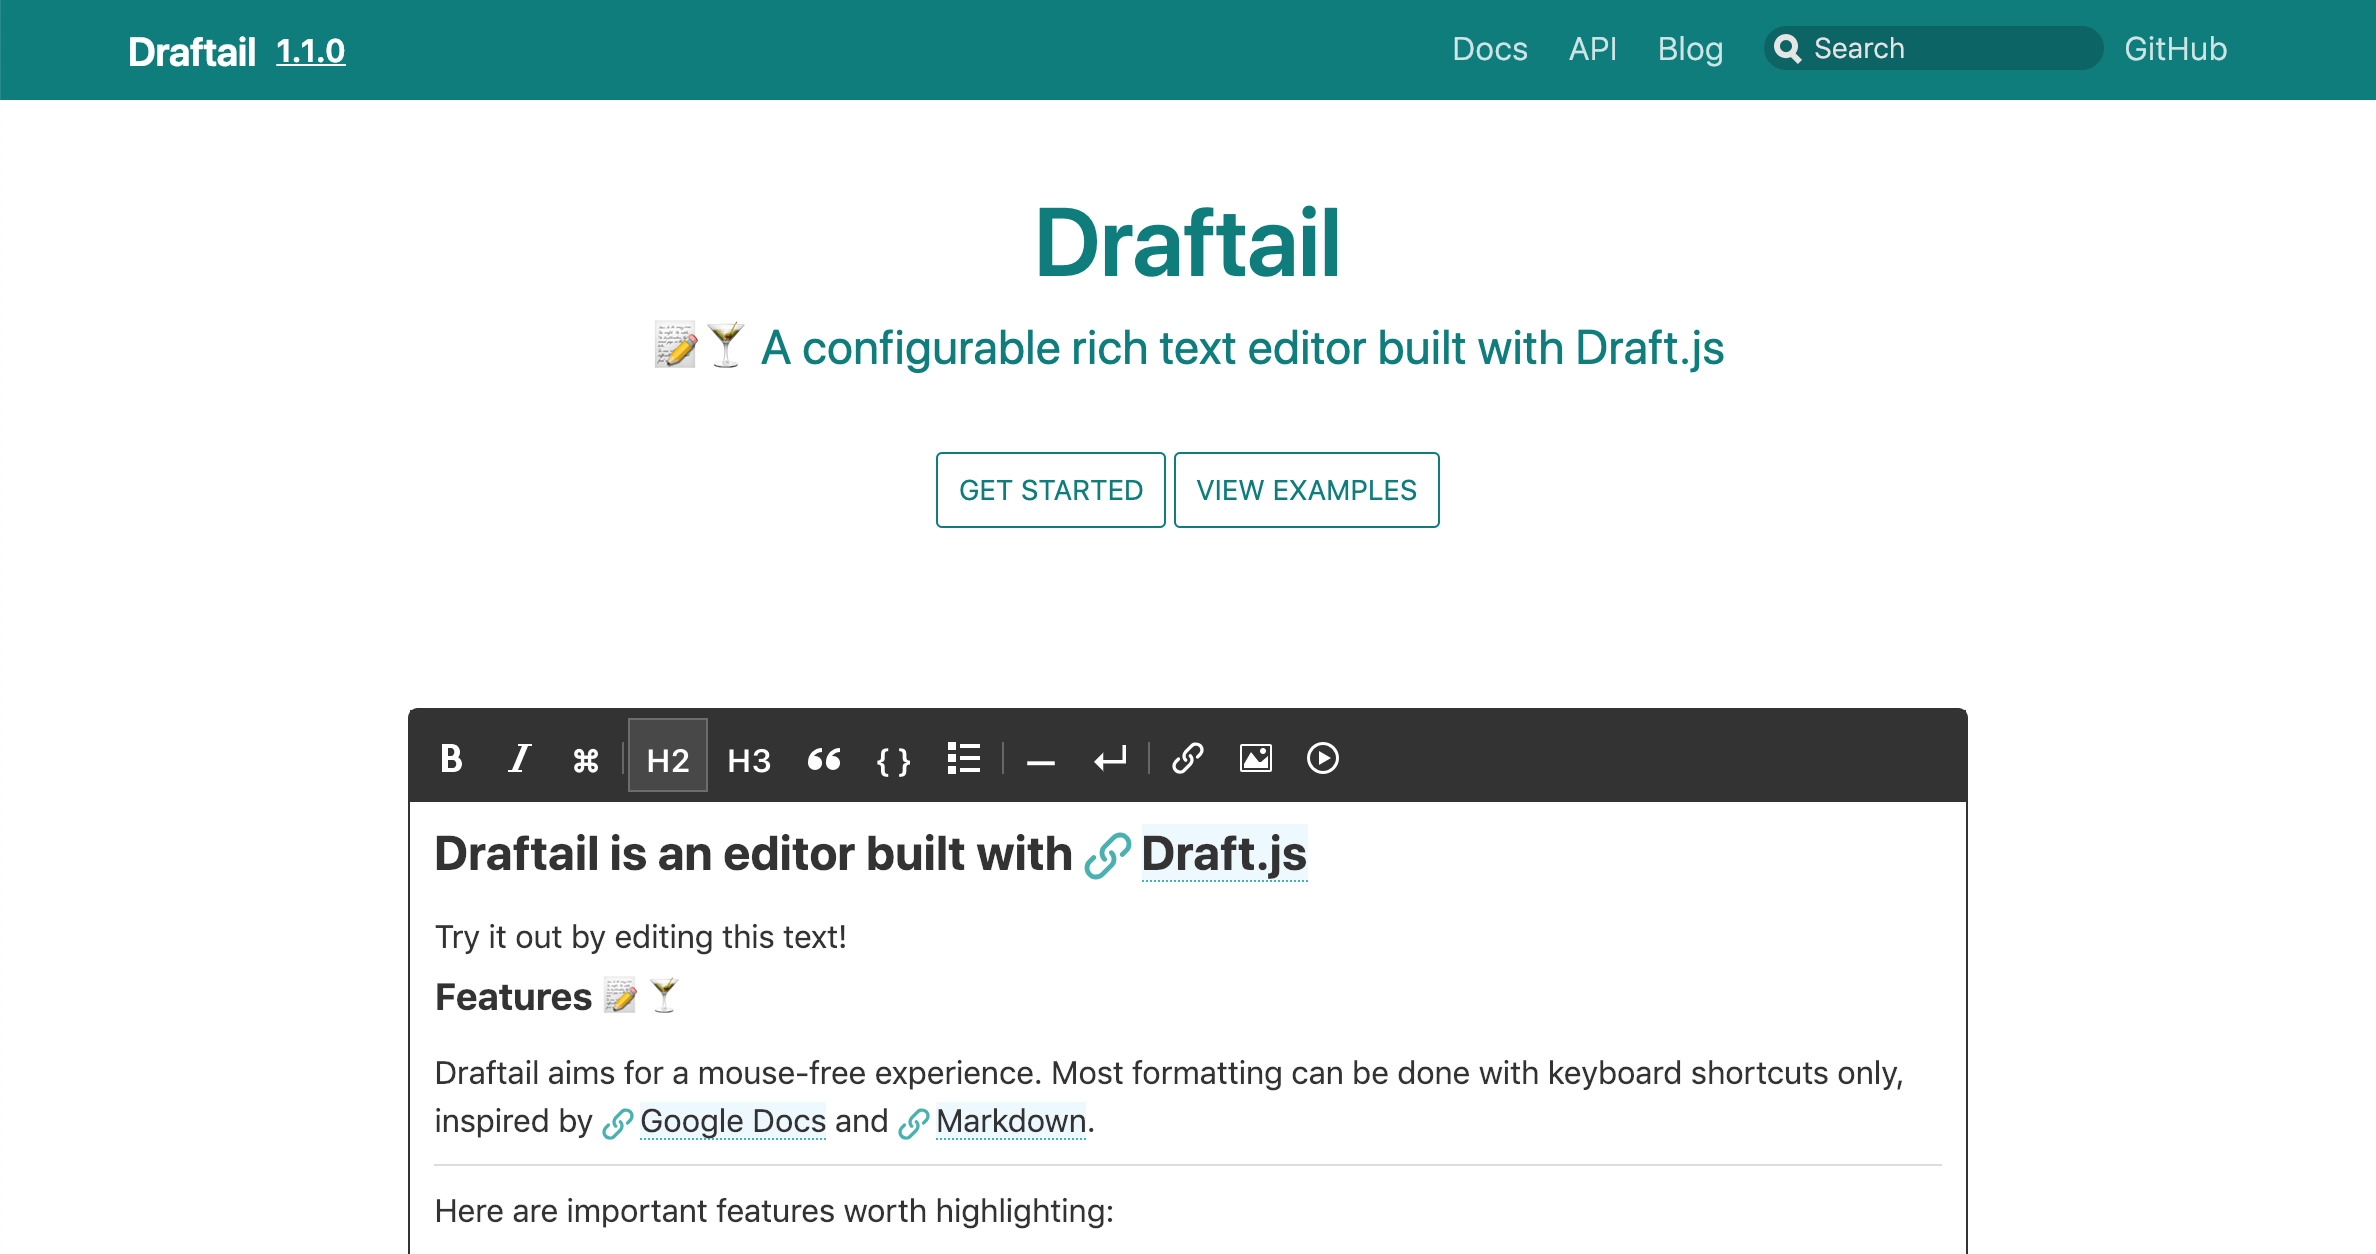 Screenshot of the draftail.org homepage